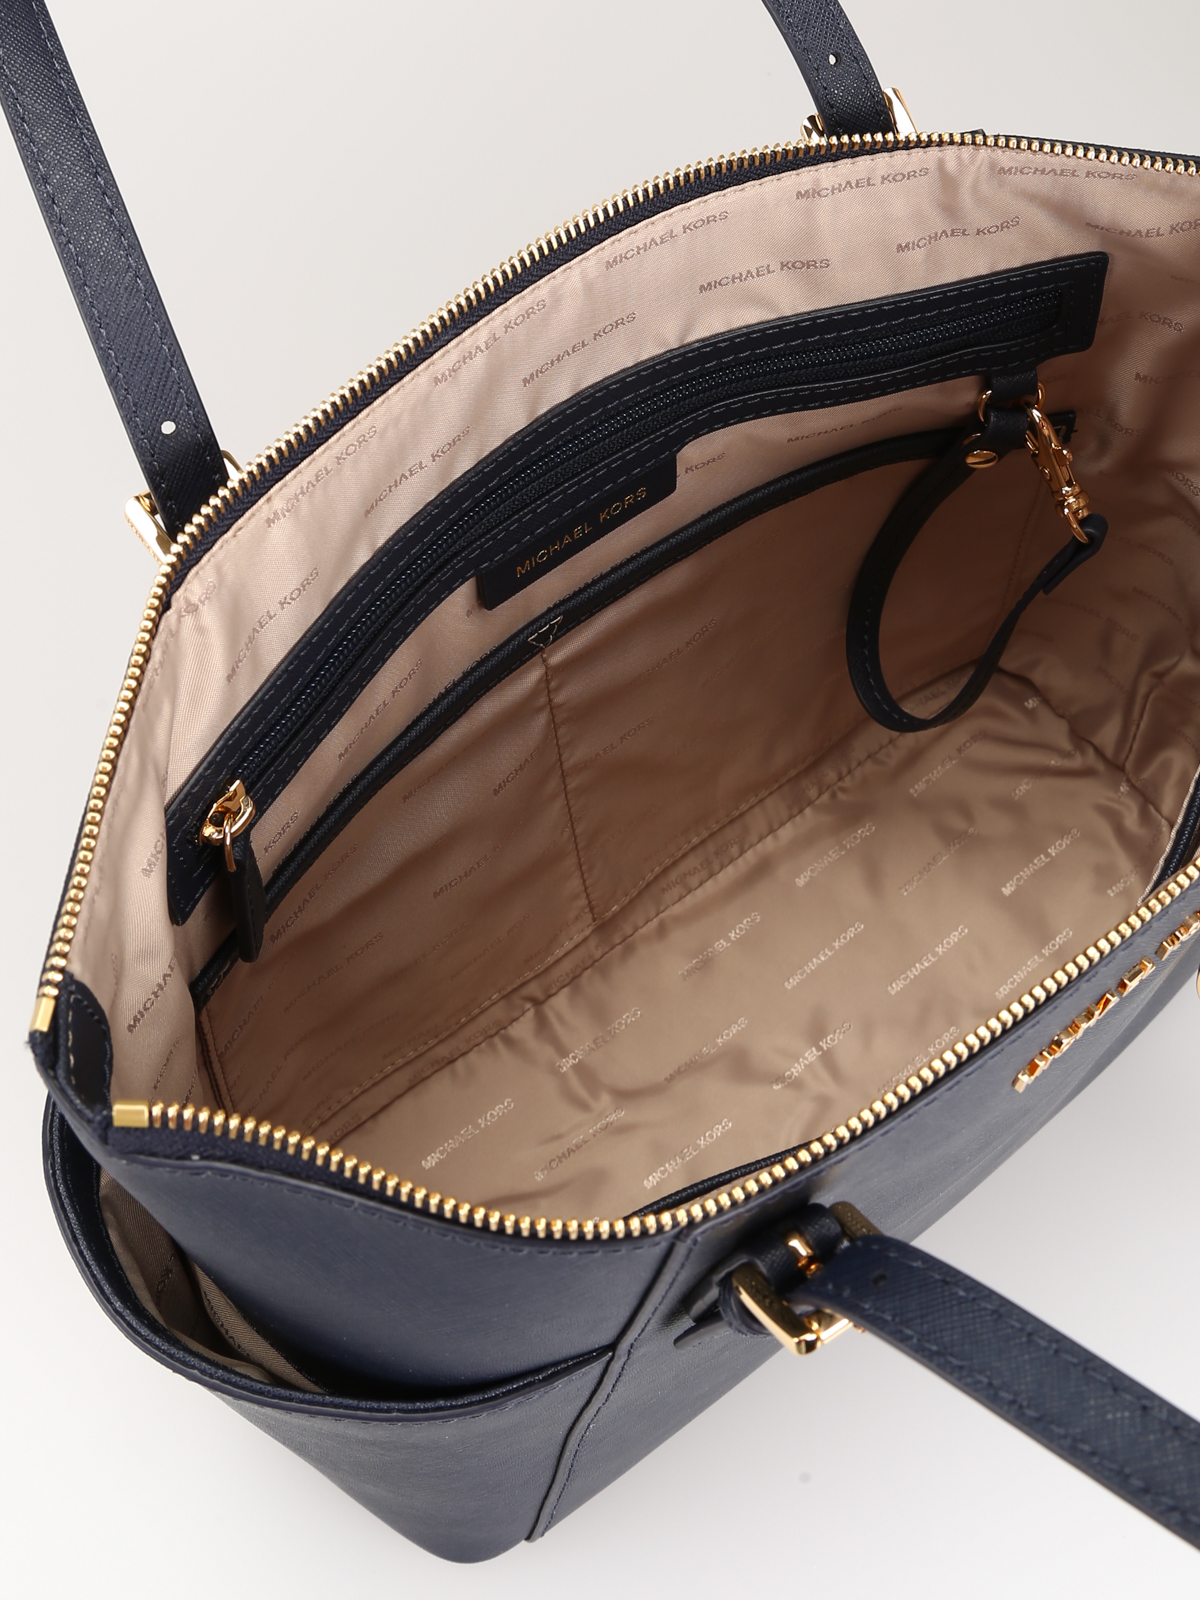 Totes bags Michael Kors - Jet Set top zip saffiano leather tote -  30F2GTTT8L414